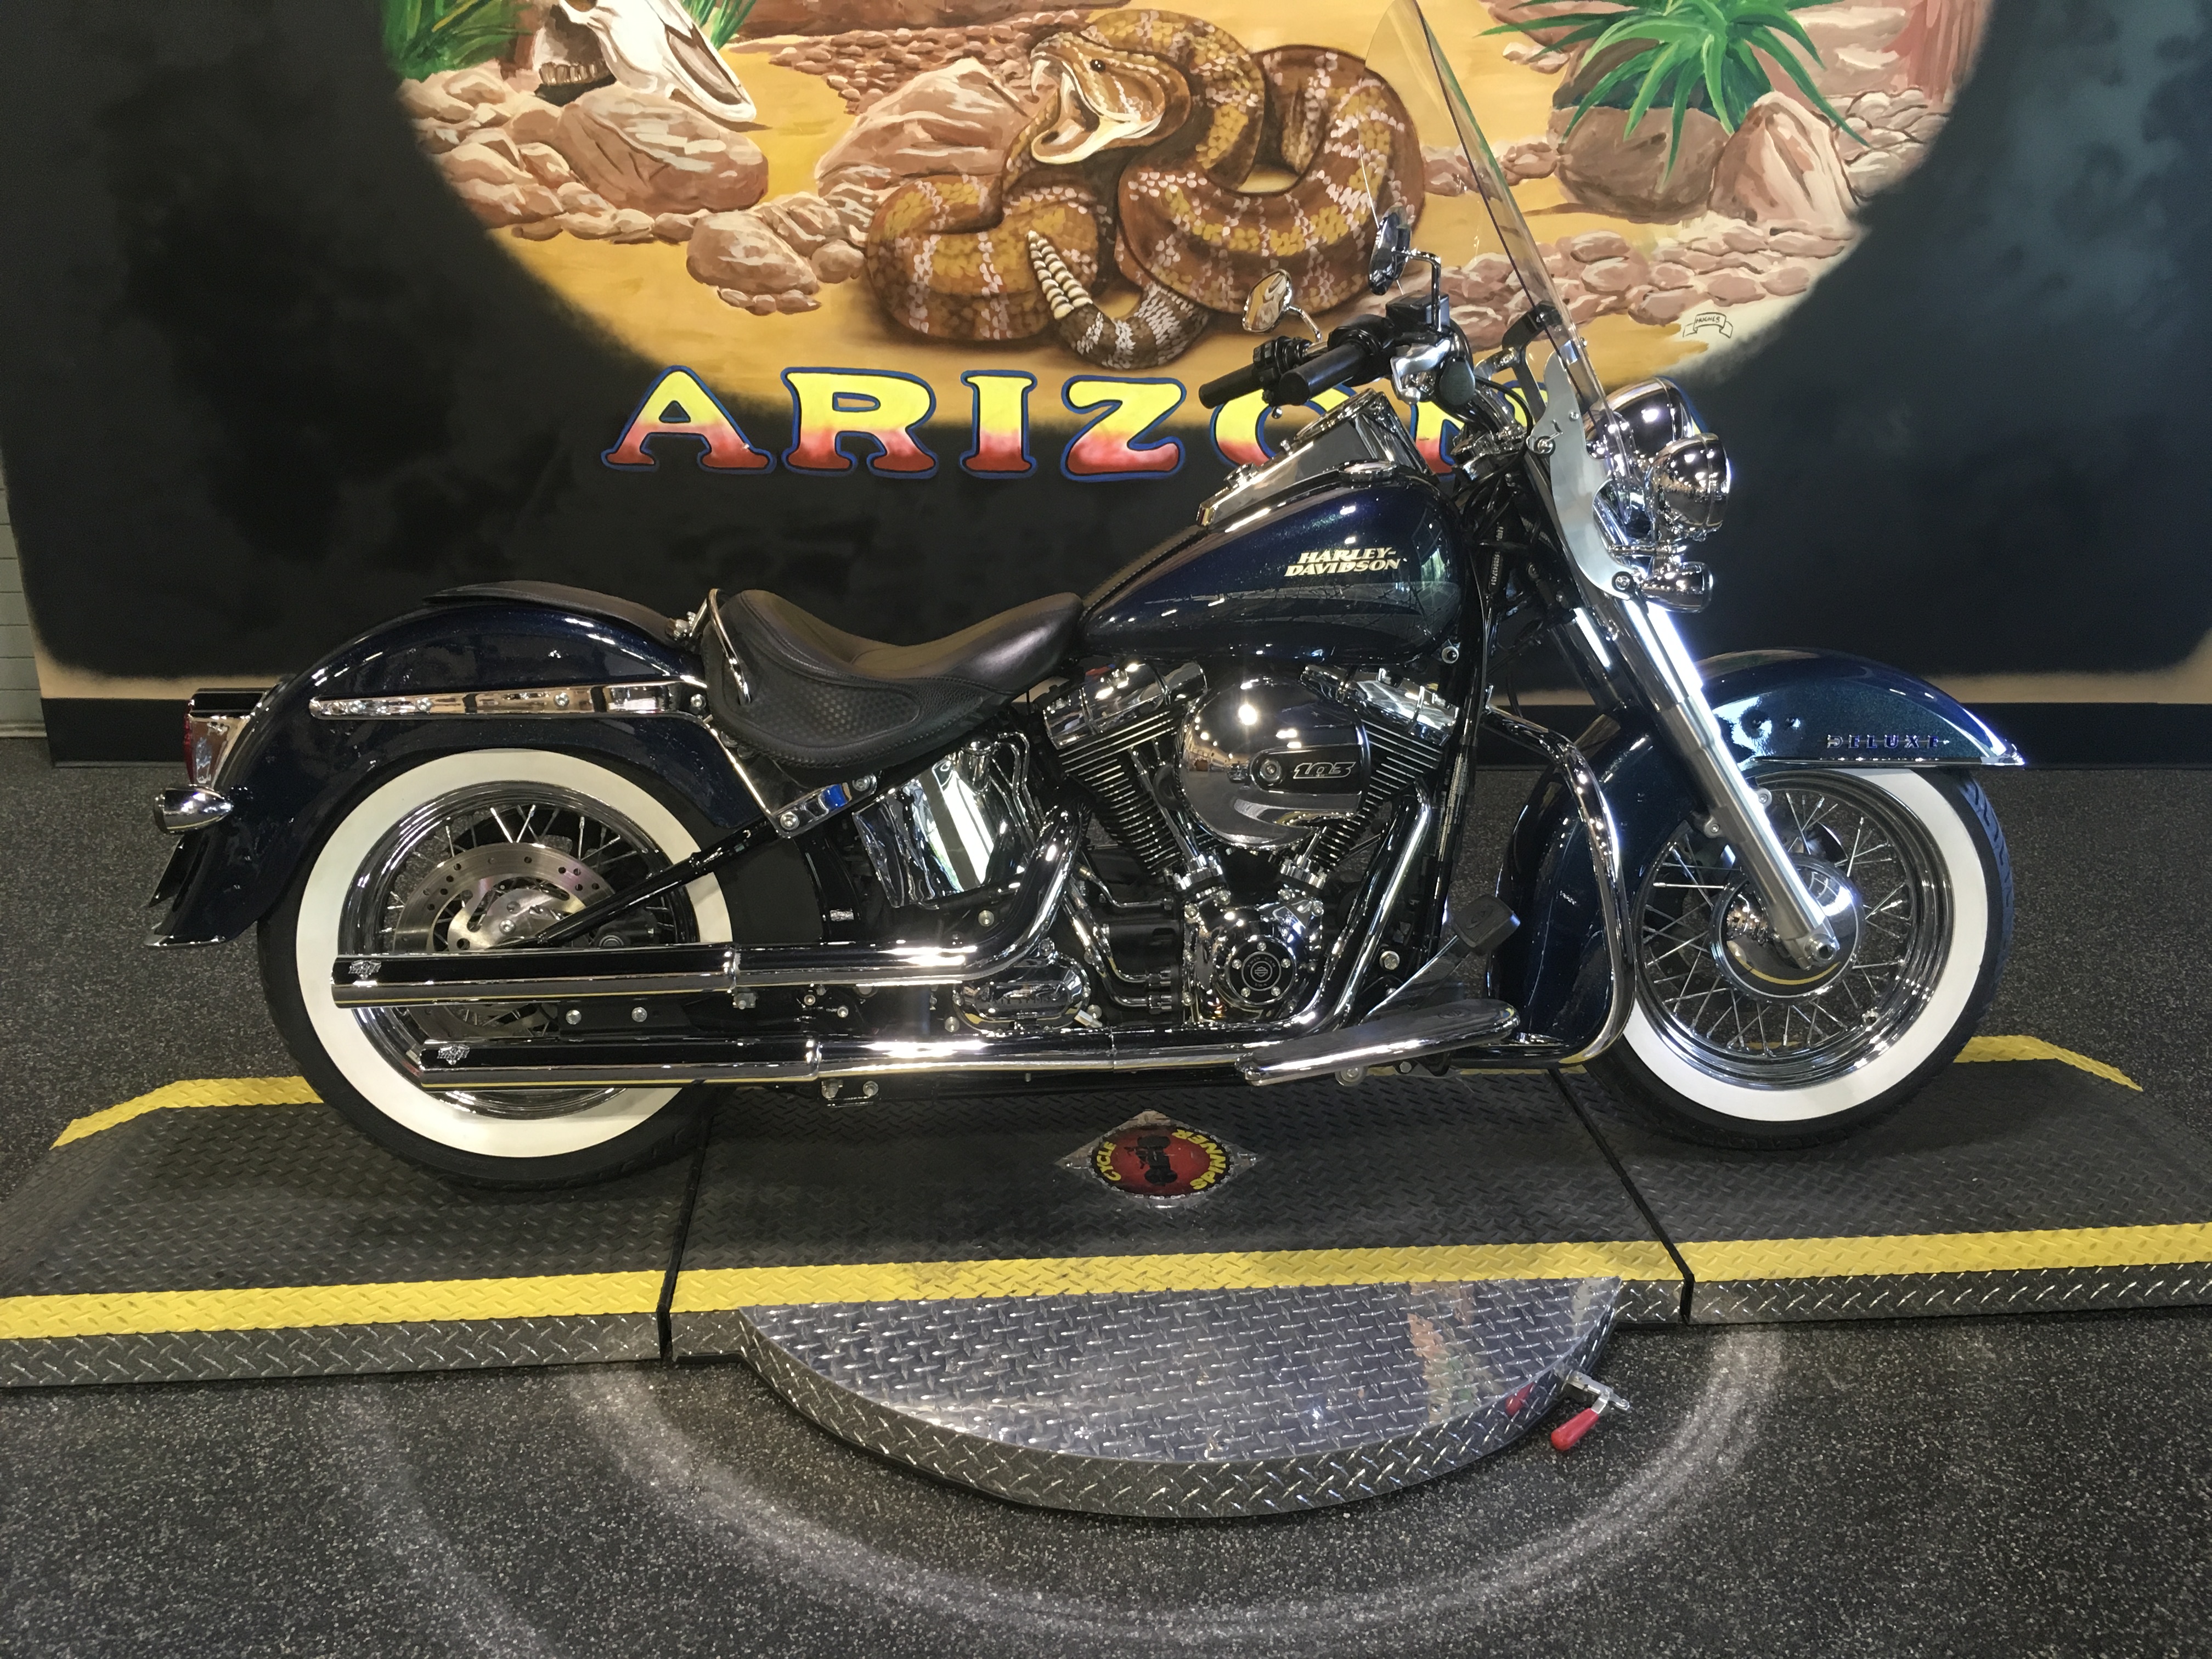 Pre-Owned 2016 Harley-Davidson Deluxe in Tucson #UD3743 | Old Pueblo